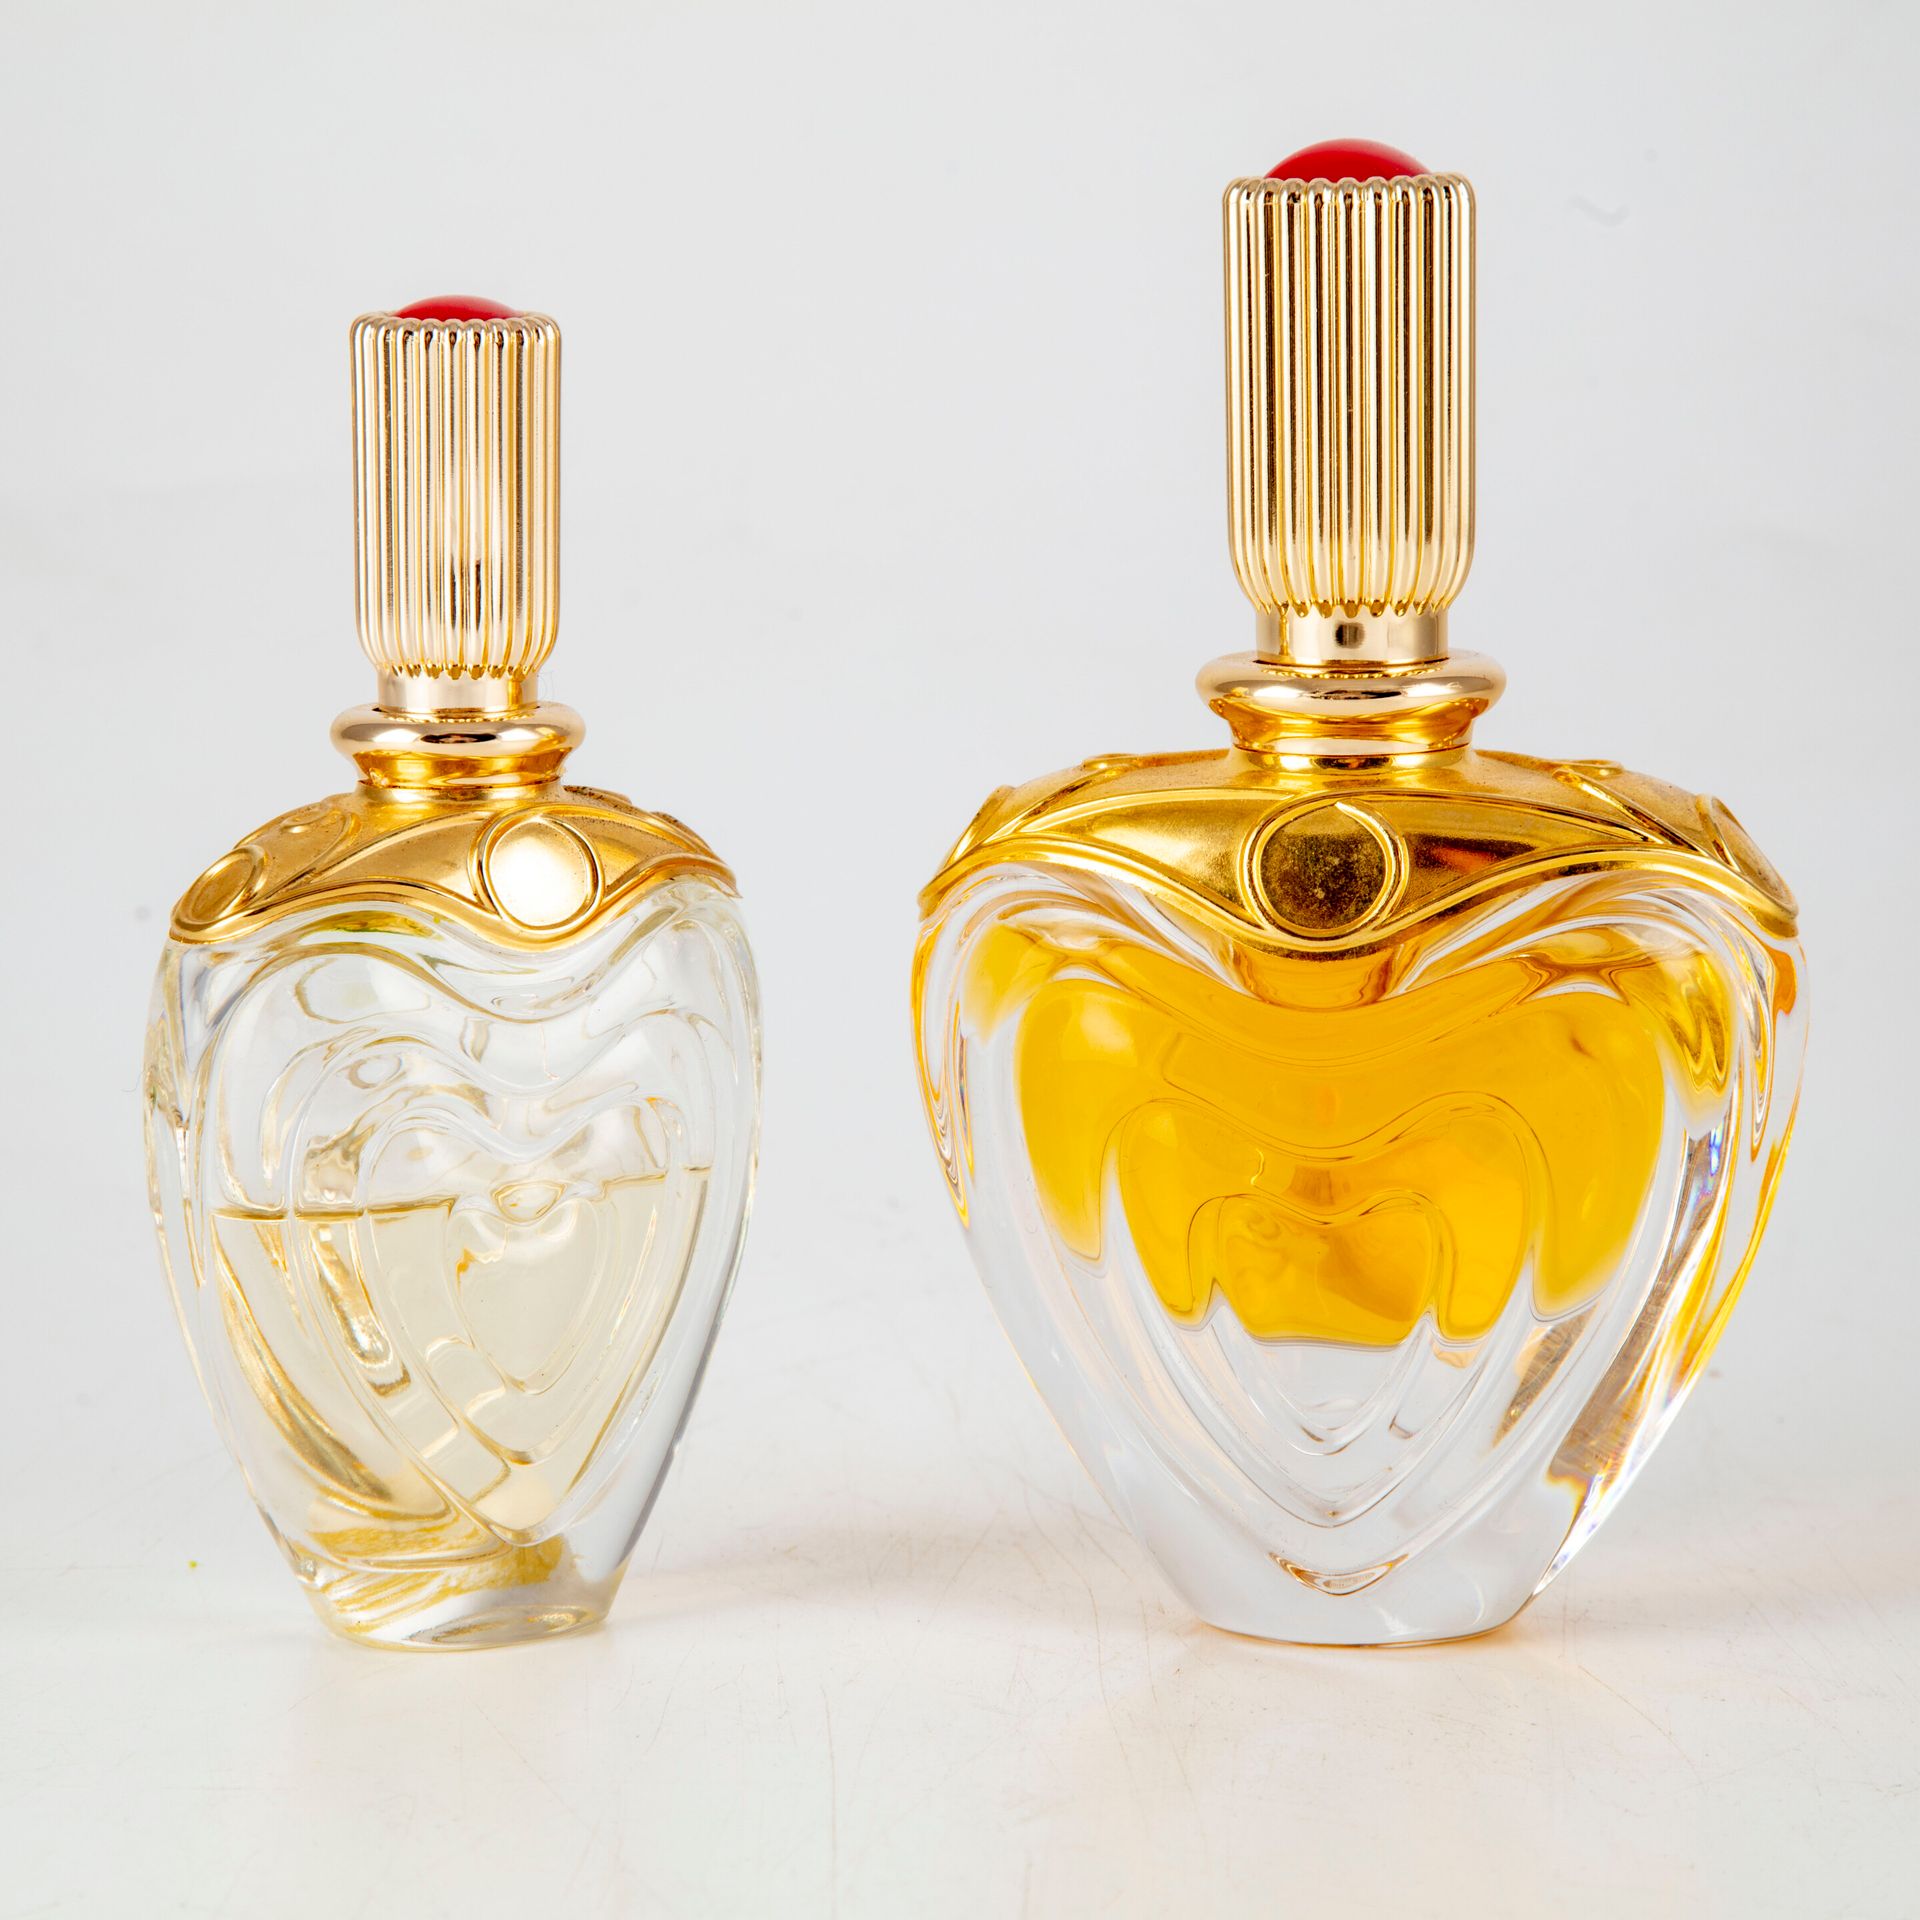 Null ESCADA

Juego de dos frascos de perfume, de cartón 

H. 13,5 y 14,5 cm